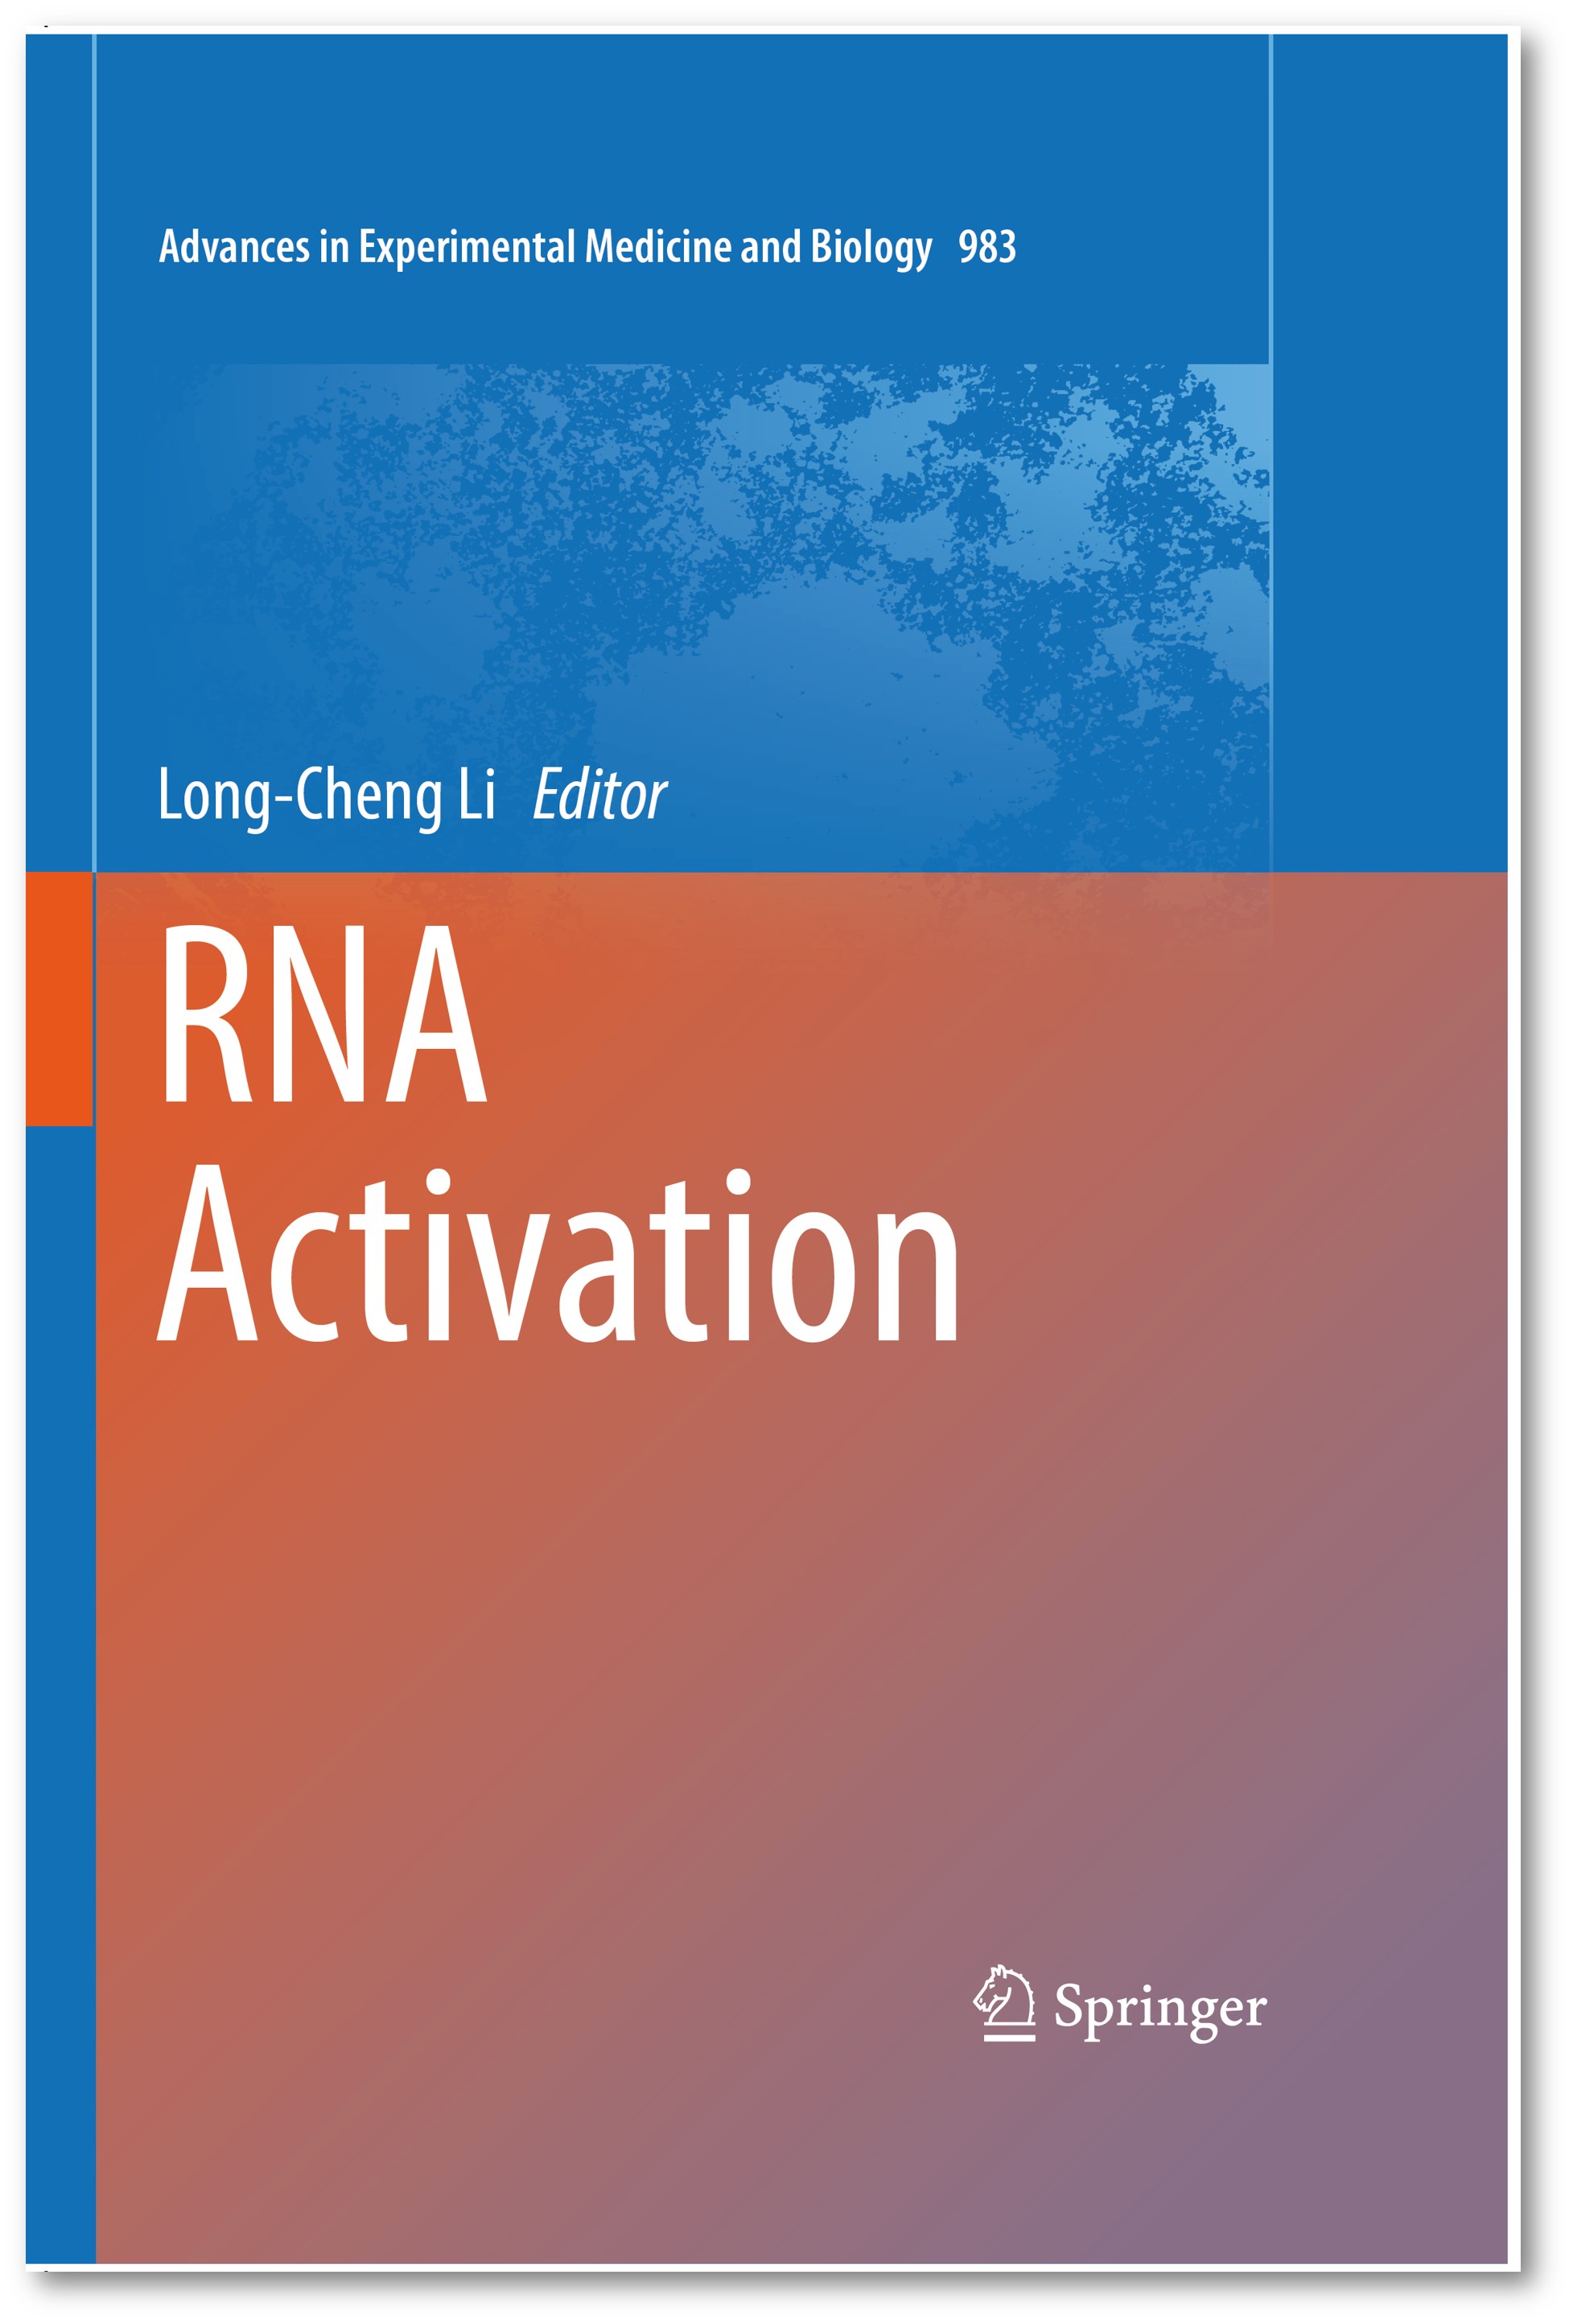 RNAa RAN activation book